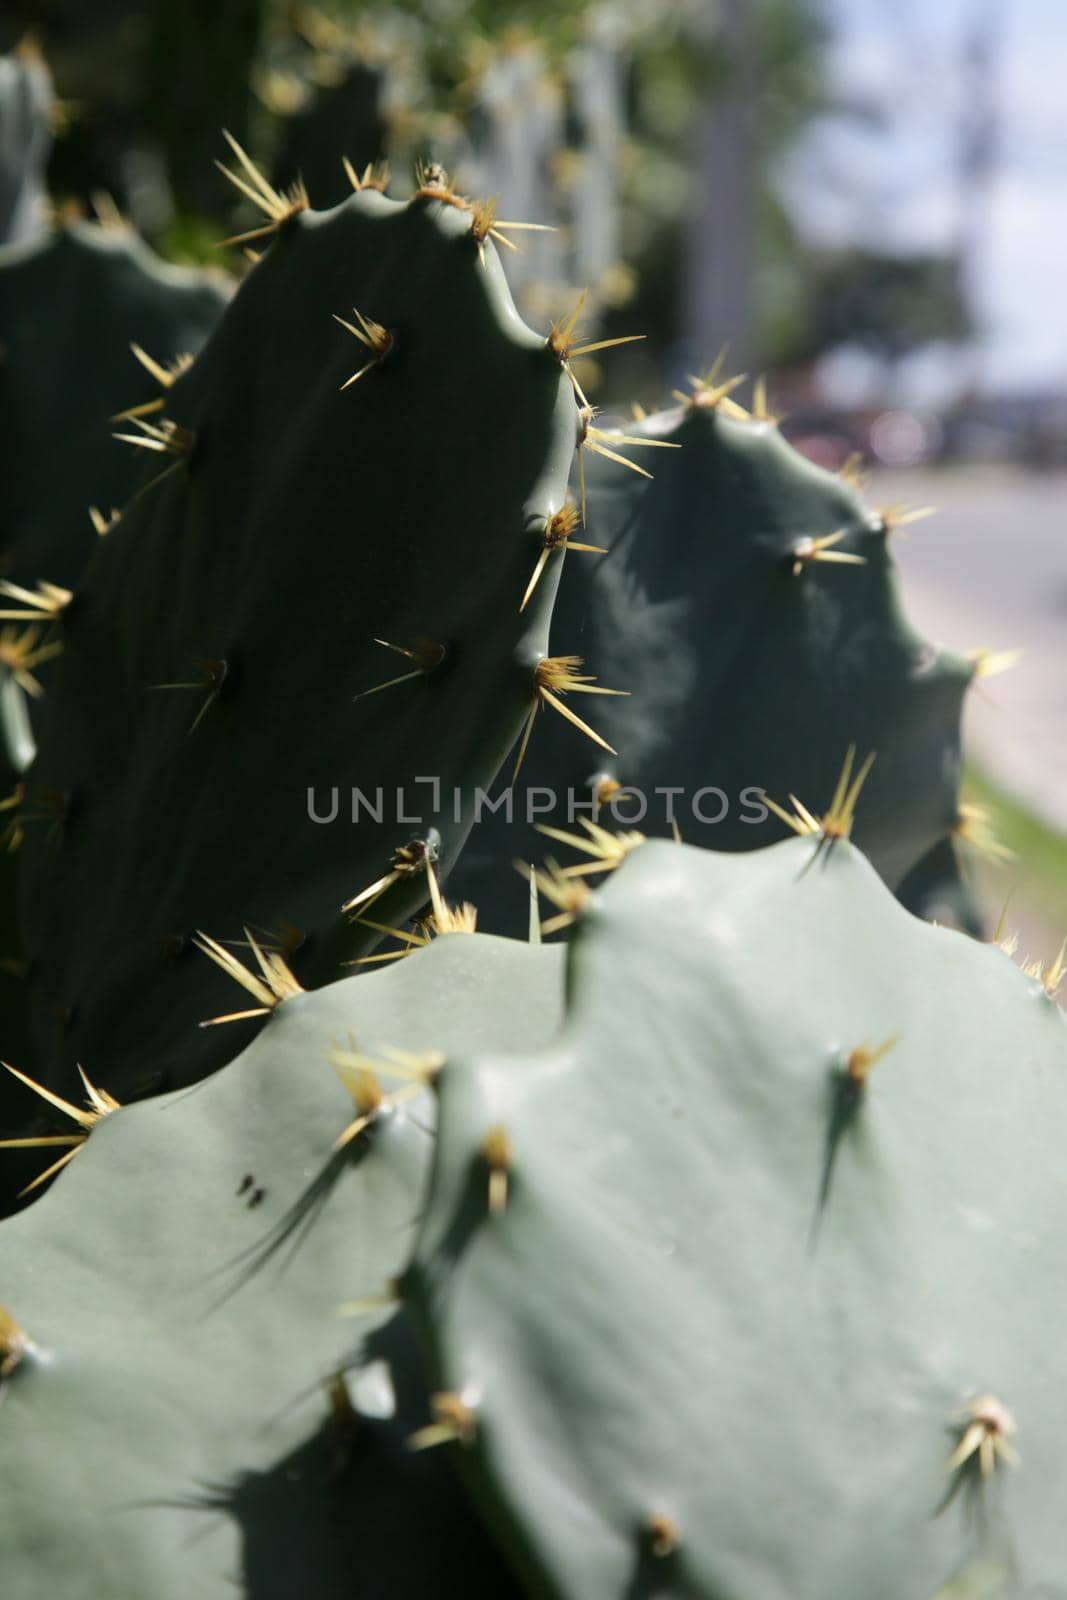 salvador, bahia, brazil - december 28, 2021: cactus thorns on a beach area in the city of Salvador.